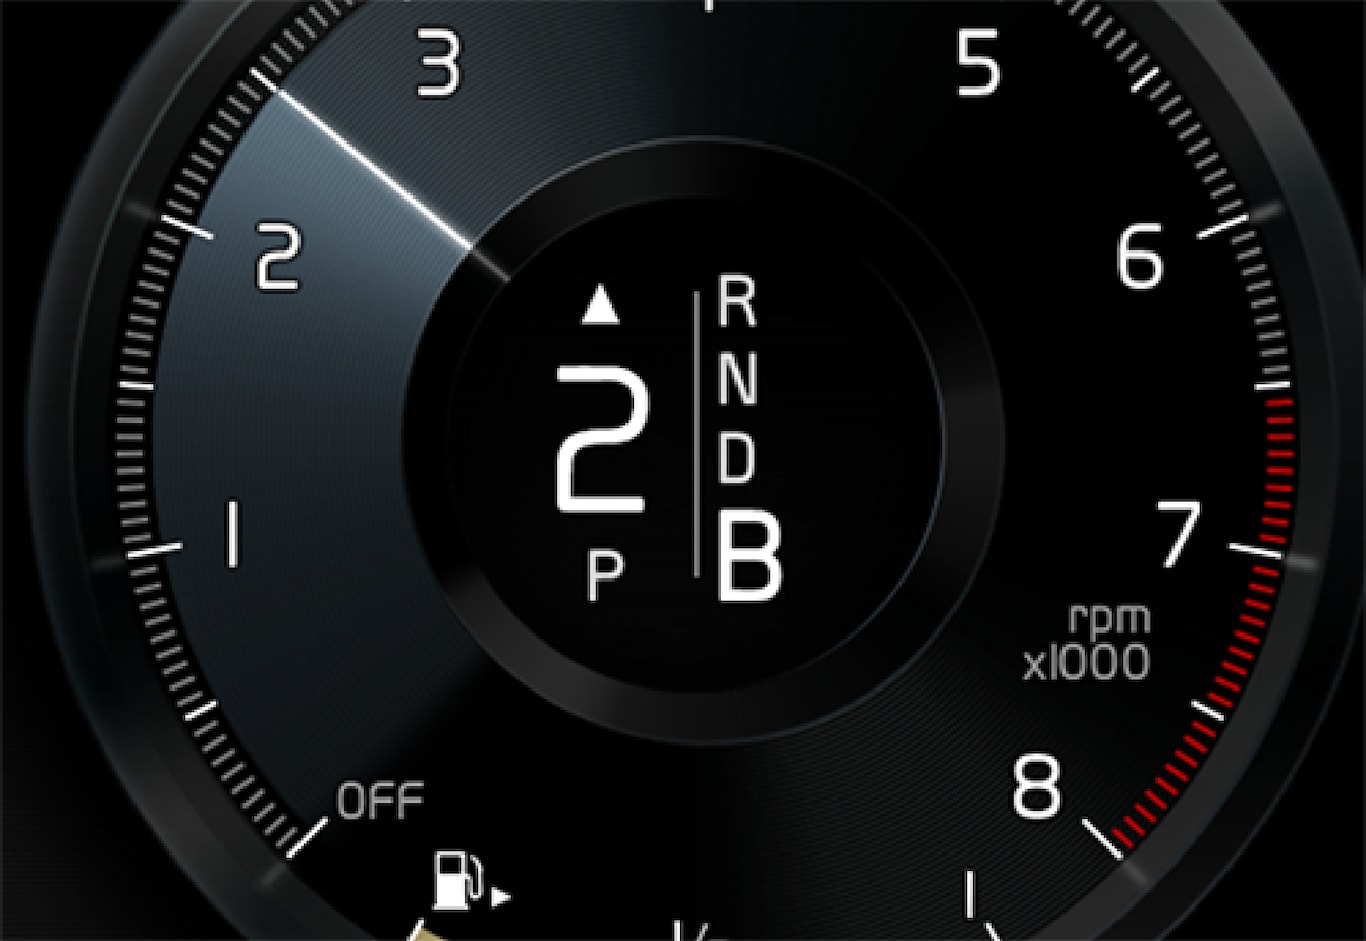 P5-1519-XC90 Hybrid gear shift indicator in DIM